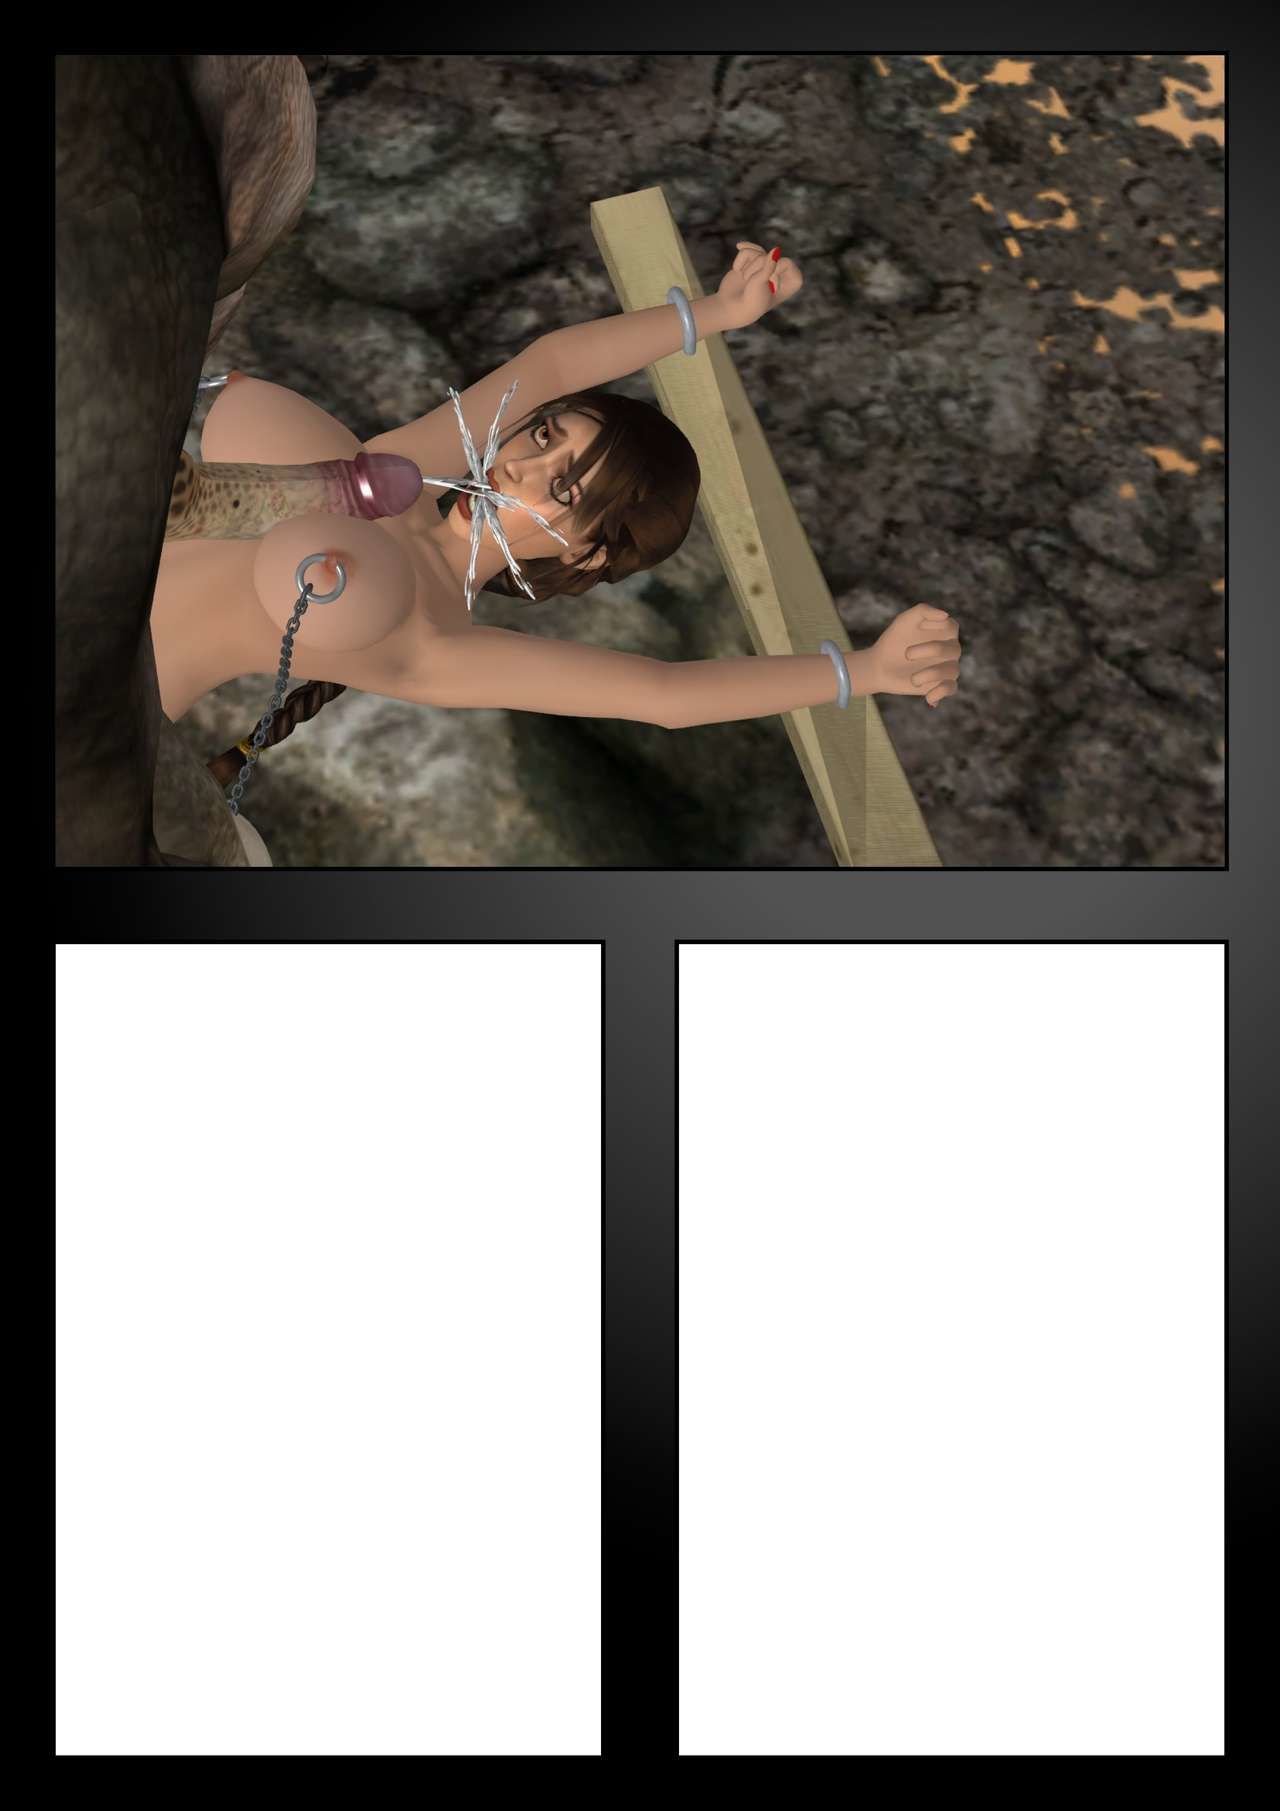 Lara Croft Vs The Minotaurus W.I.P. - part 2